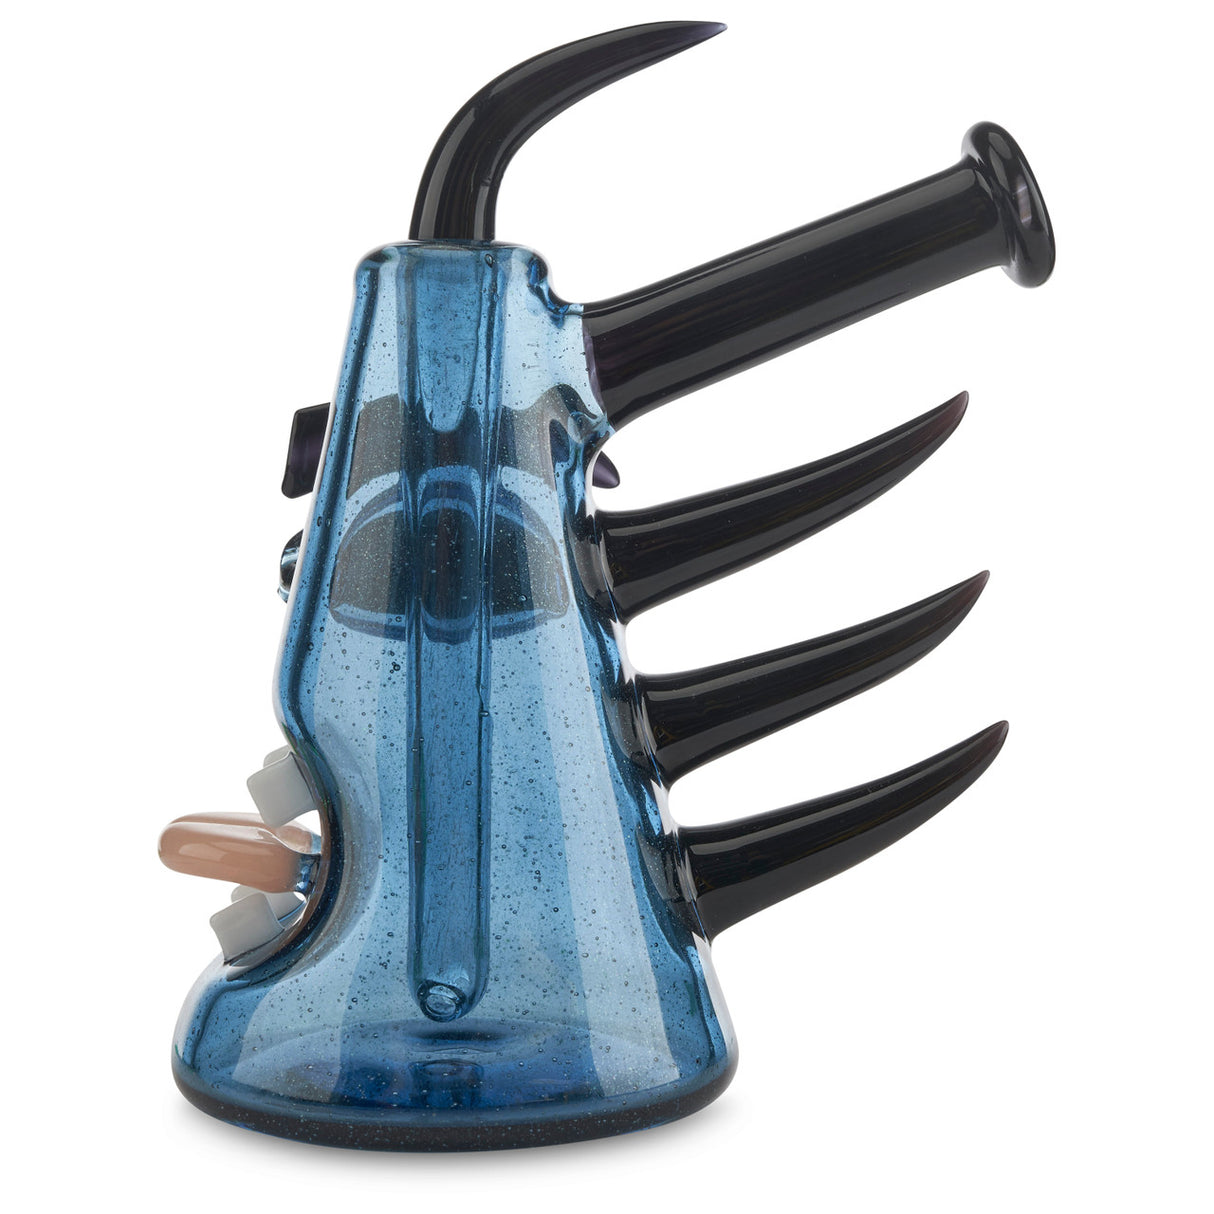 etai rahmil mini shredder blue for sale online